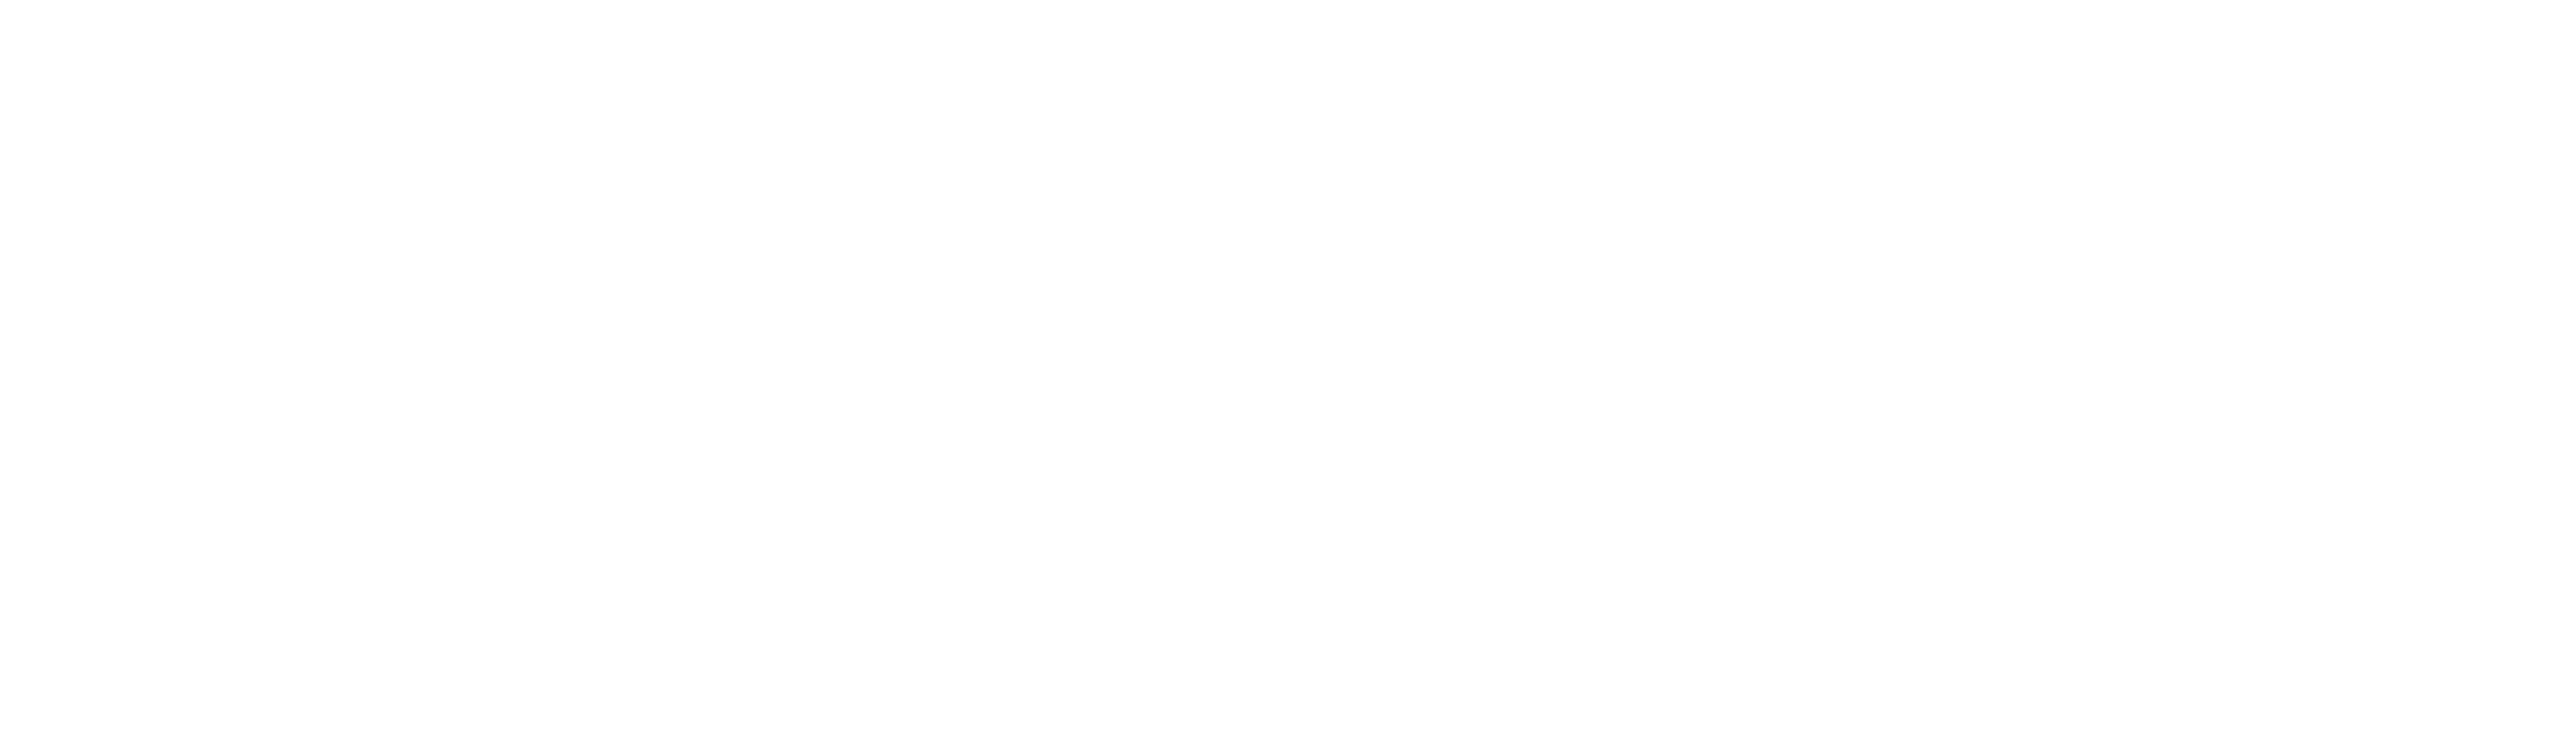 AlphaBlendInteractive